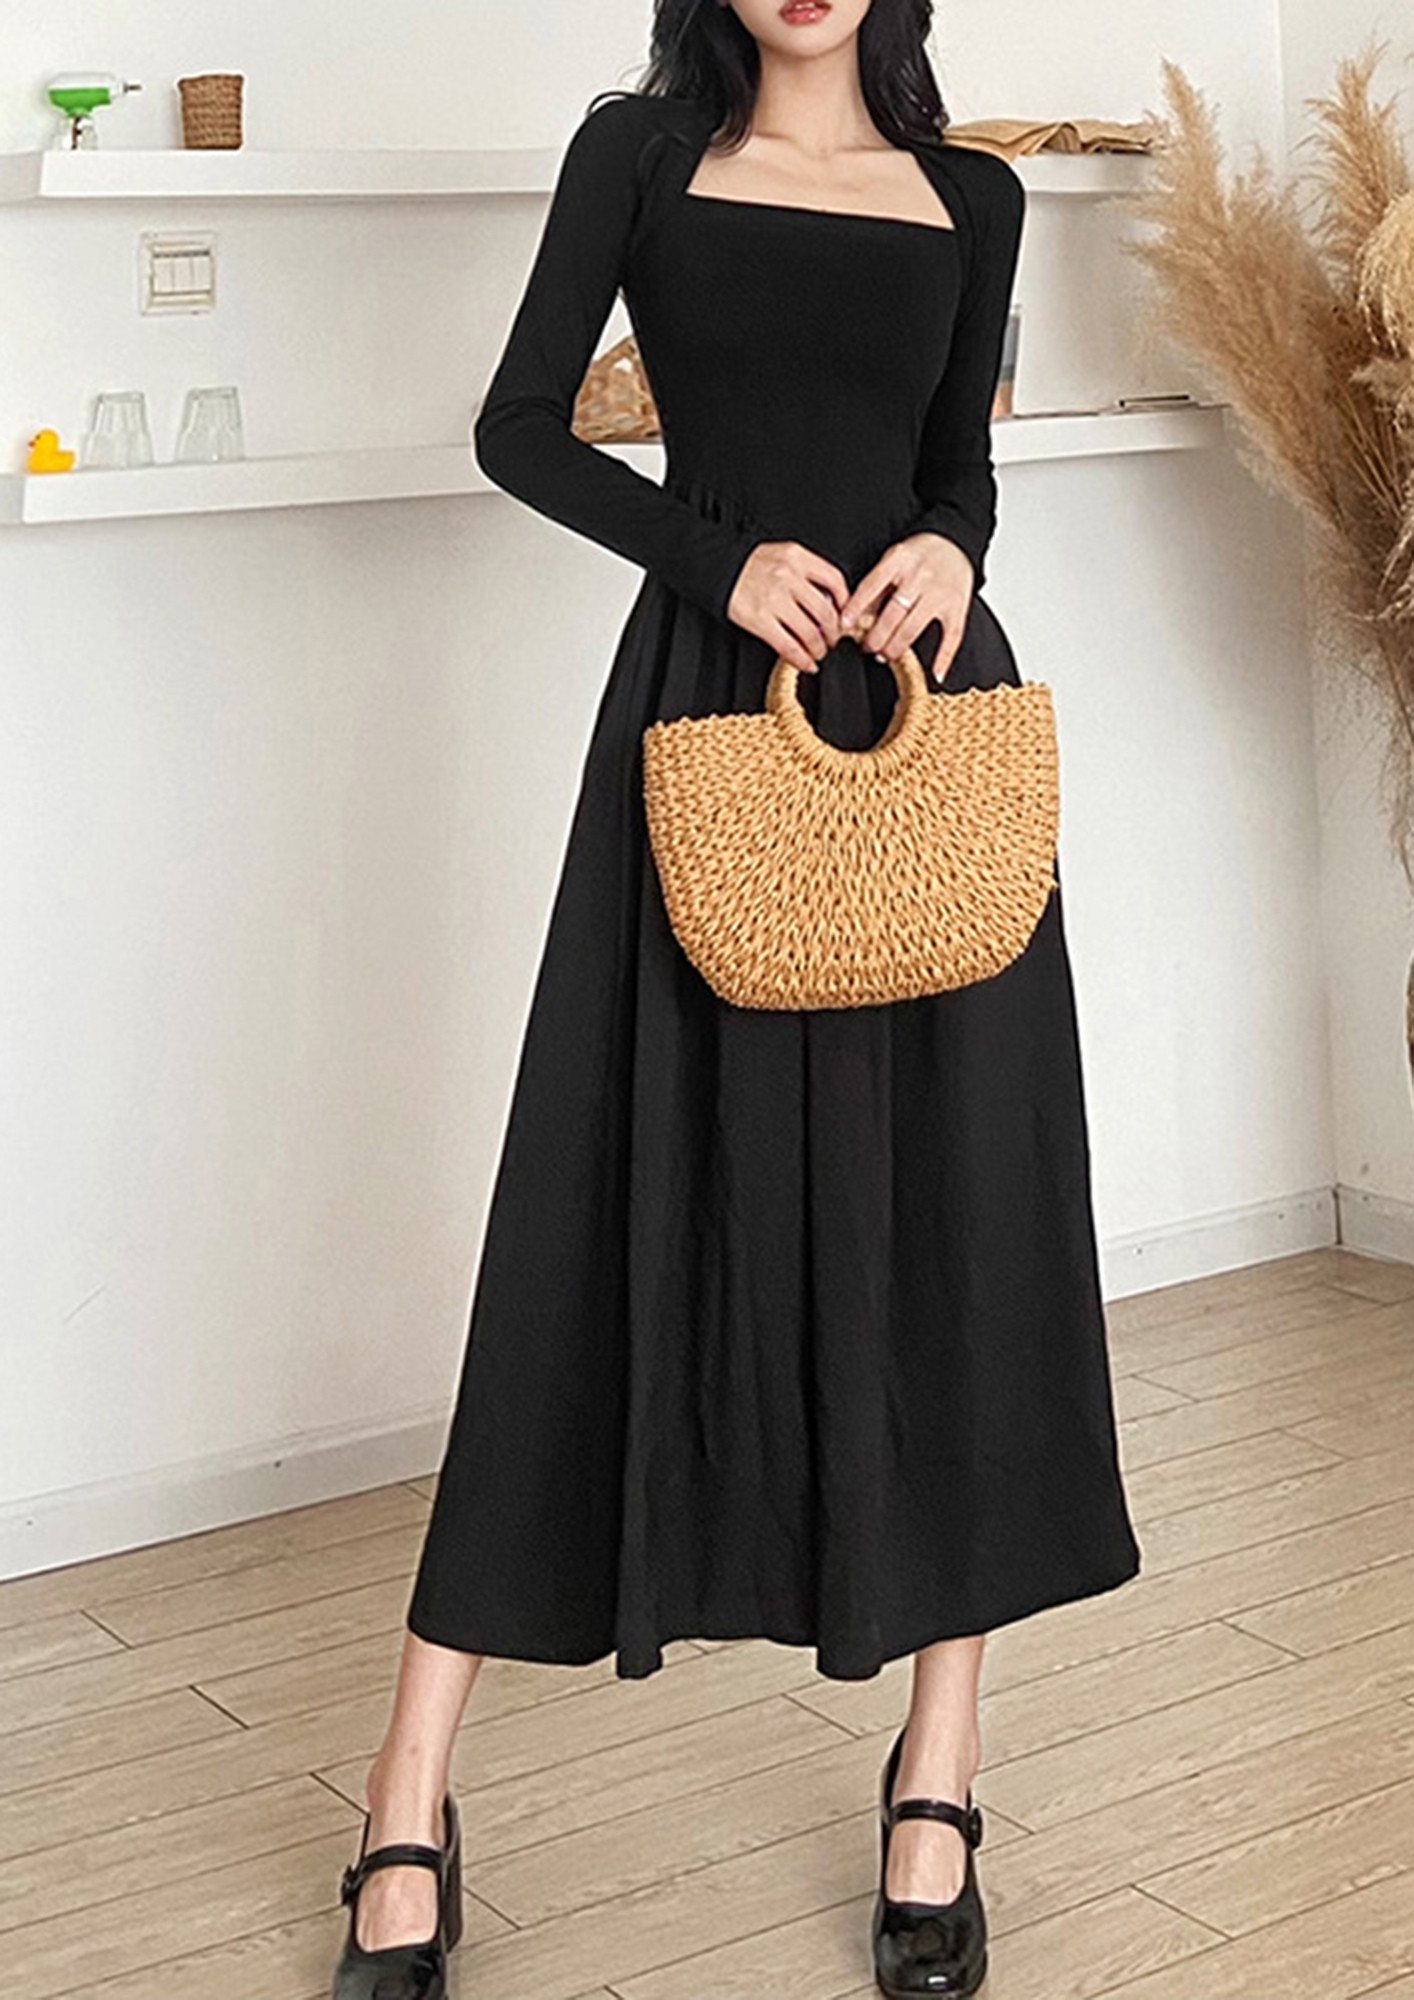 Take style inspiration from Sunny Leone's little black dress – OTTplay